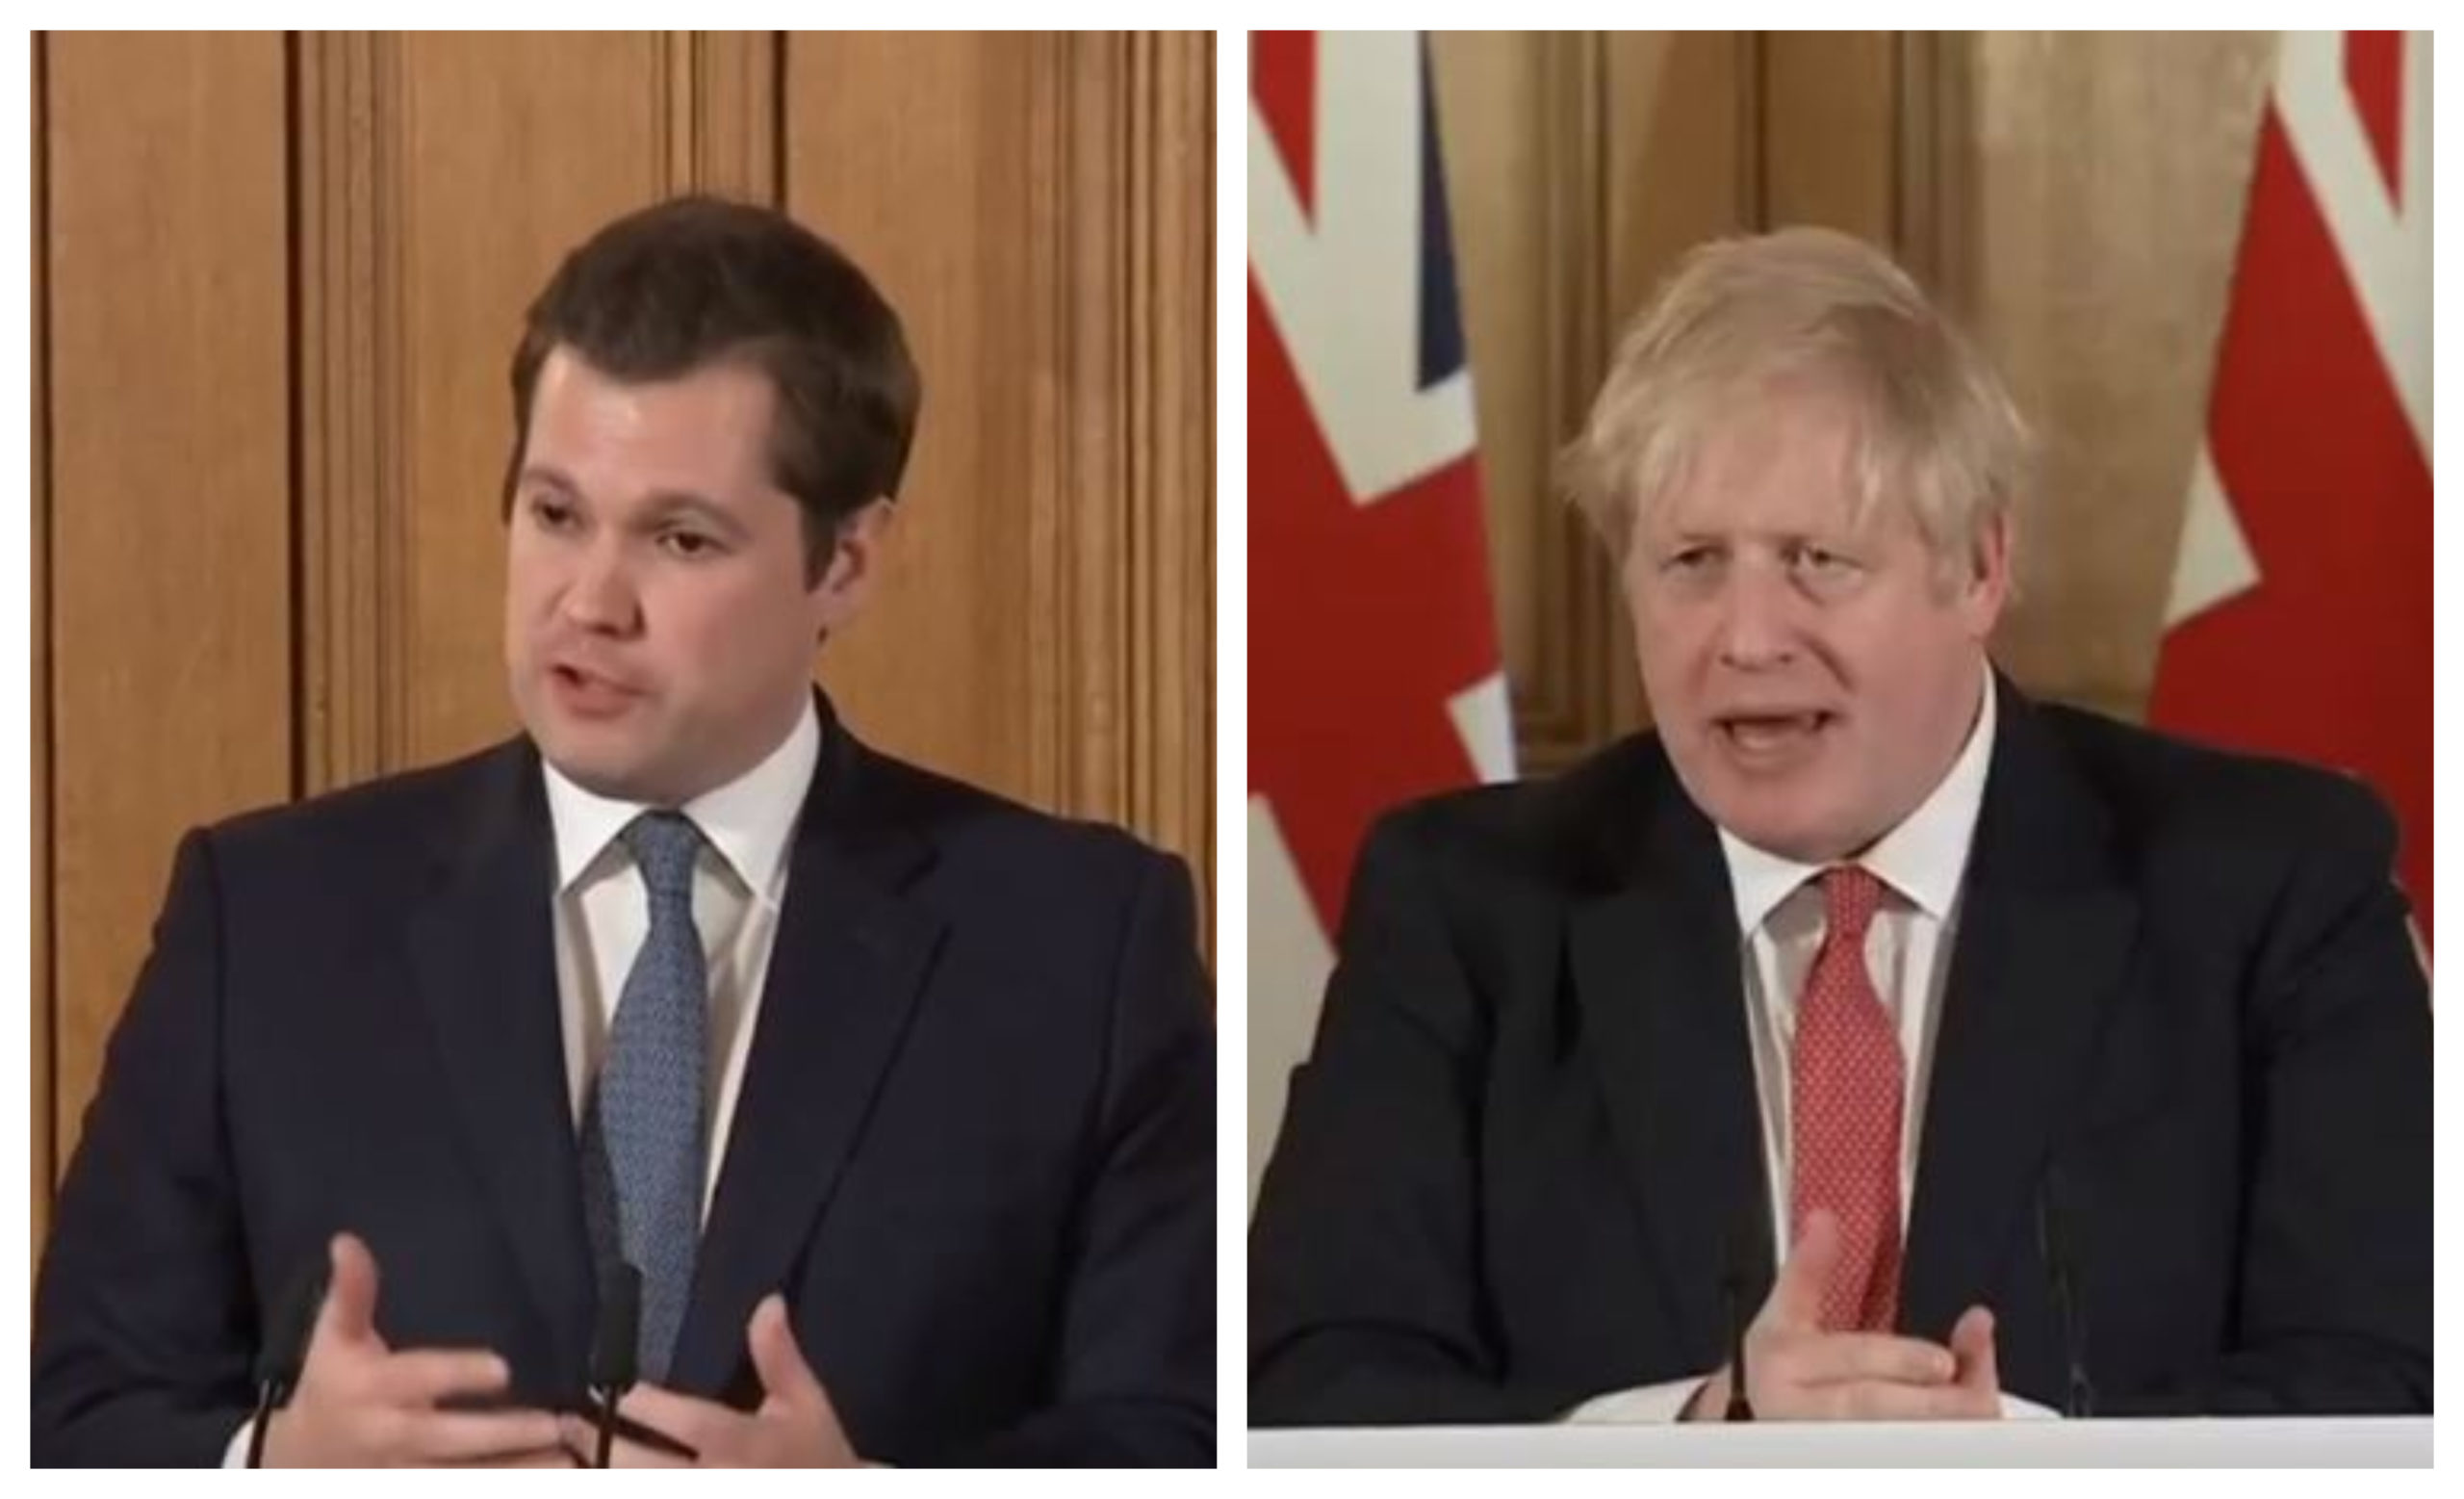 Robert Jenrick and Boris Johnson speak at the press conference.